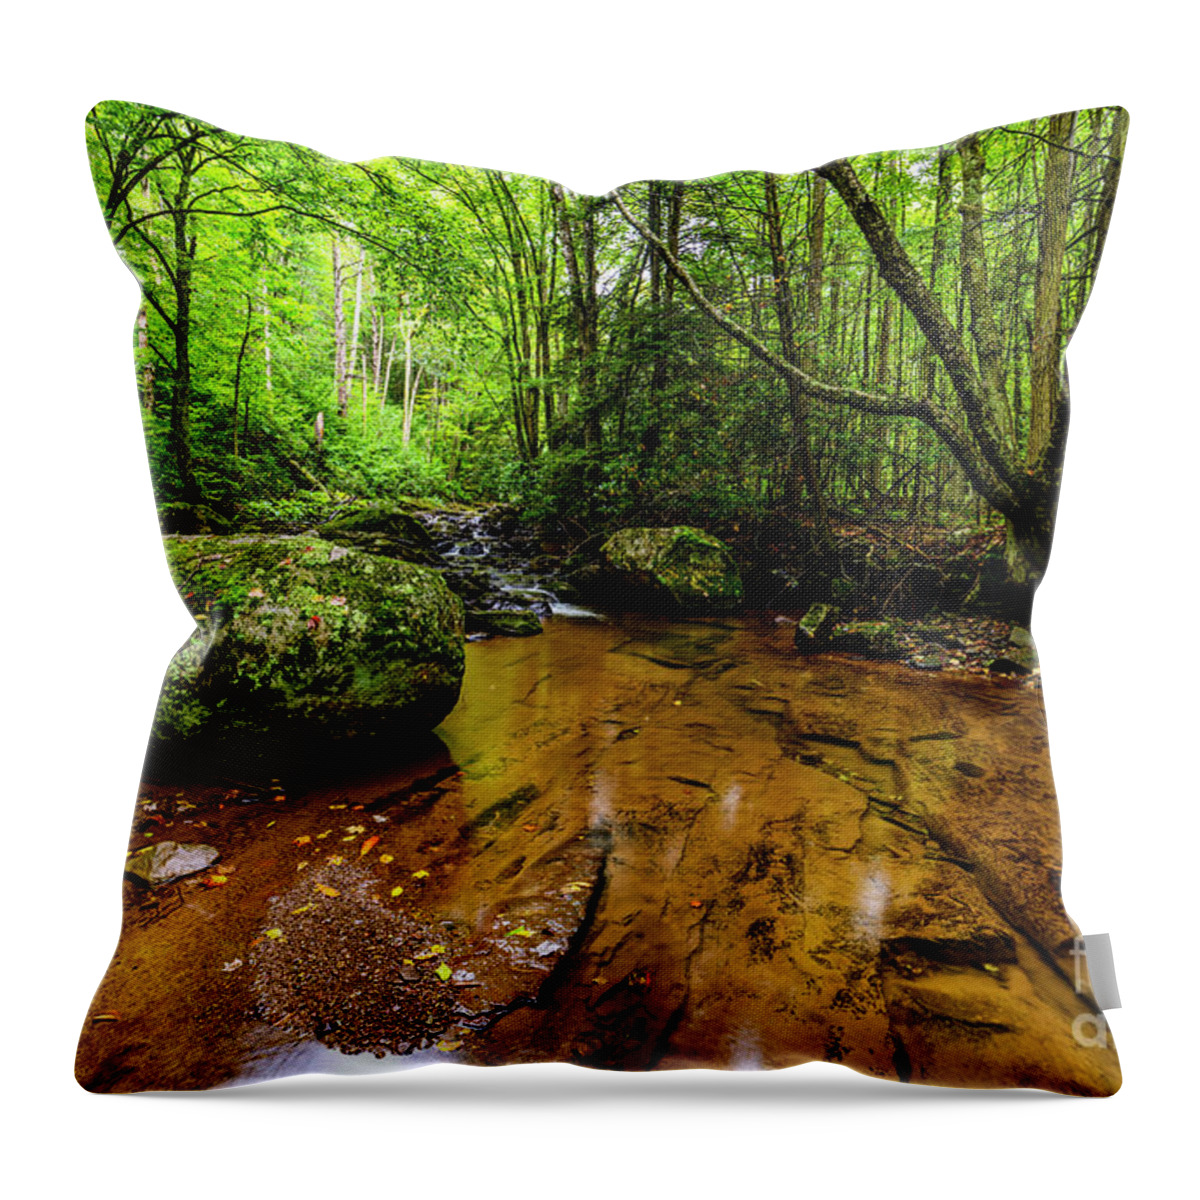 Monongahela National Forest Throw Pillow featuring the photograph Hills Creek Monongahela National Forest #2 by Thomas R Fletcher